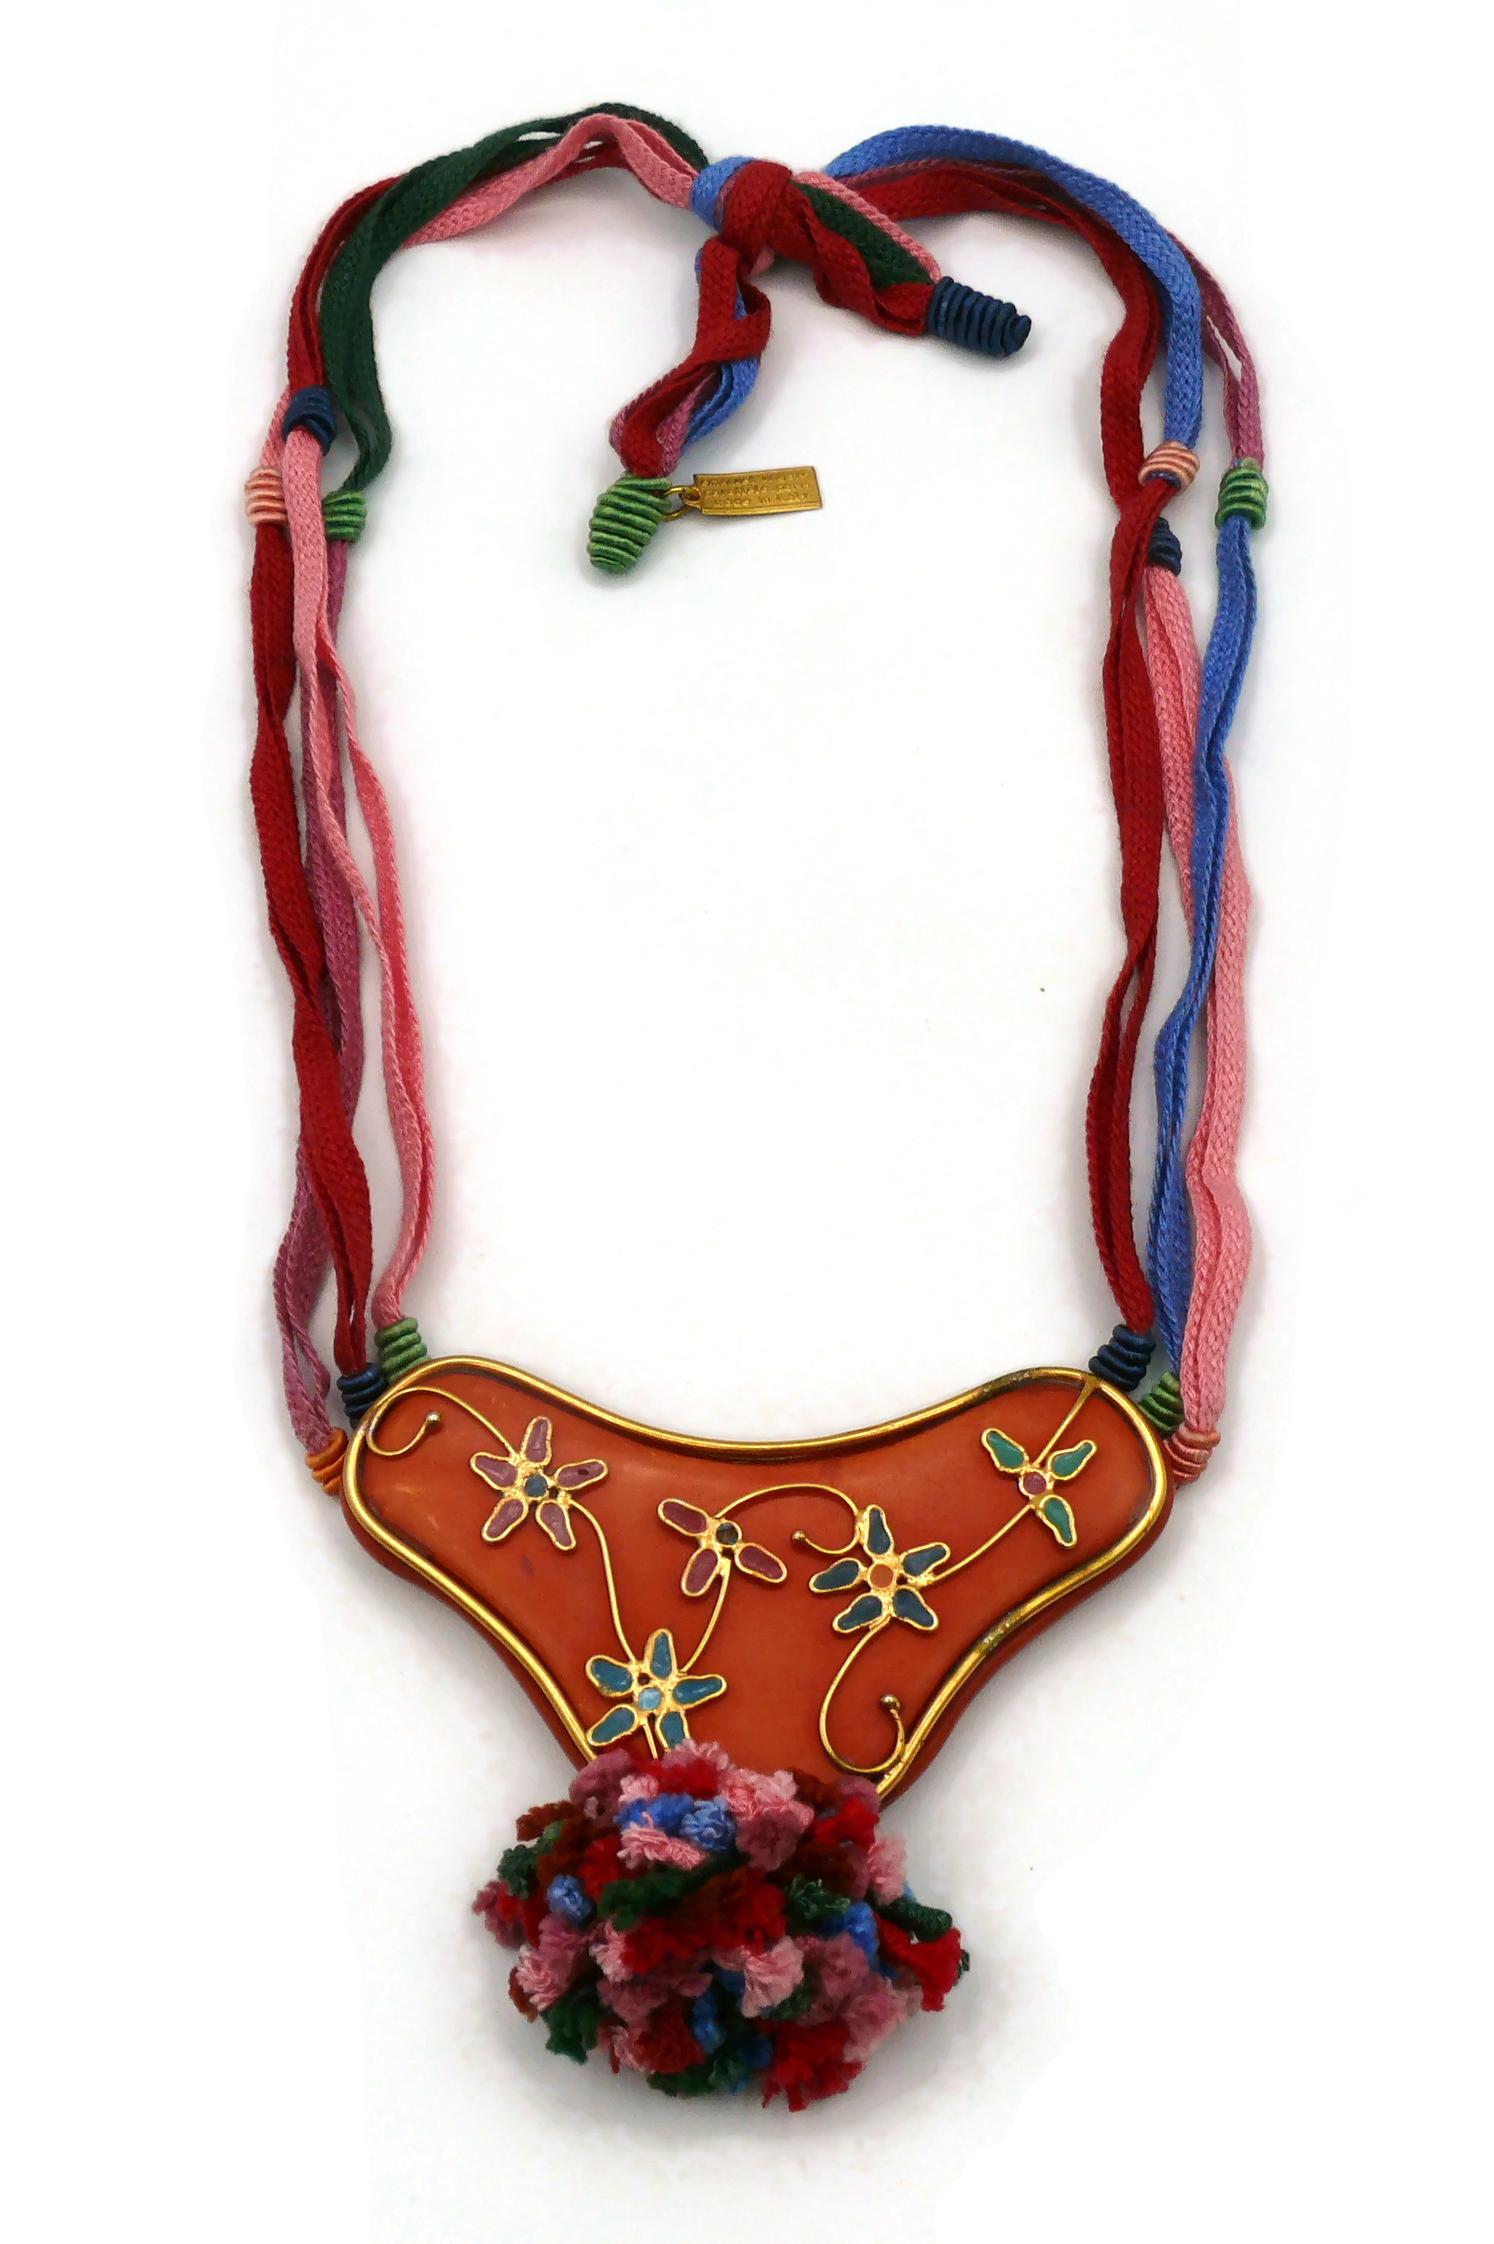 EMANUEL UNGARO Vintage Necklace In Good Condition For Sale In Nice, FR